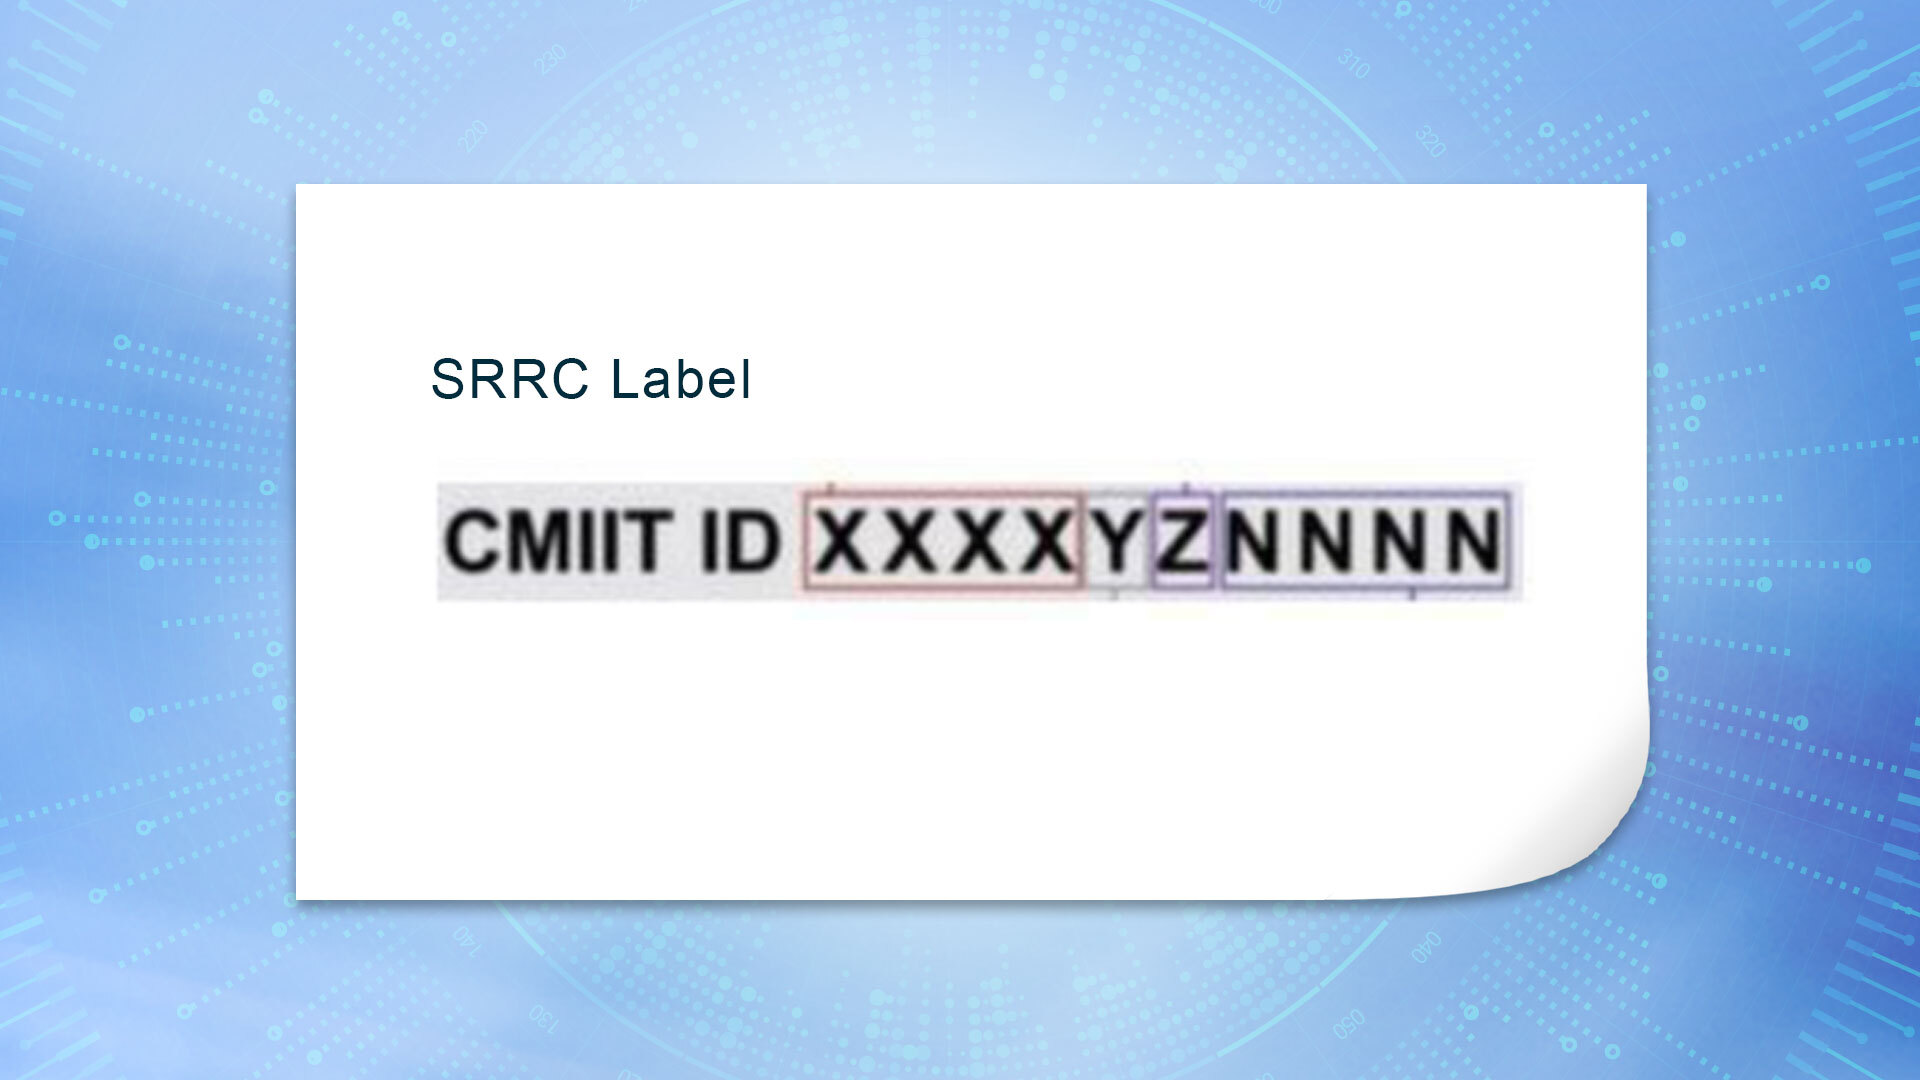 Sample of SRRC label with CMIIT ID